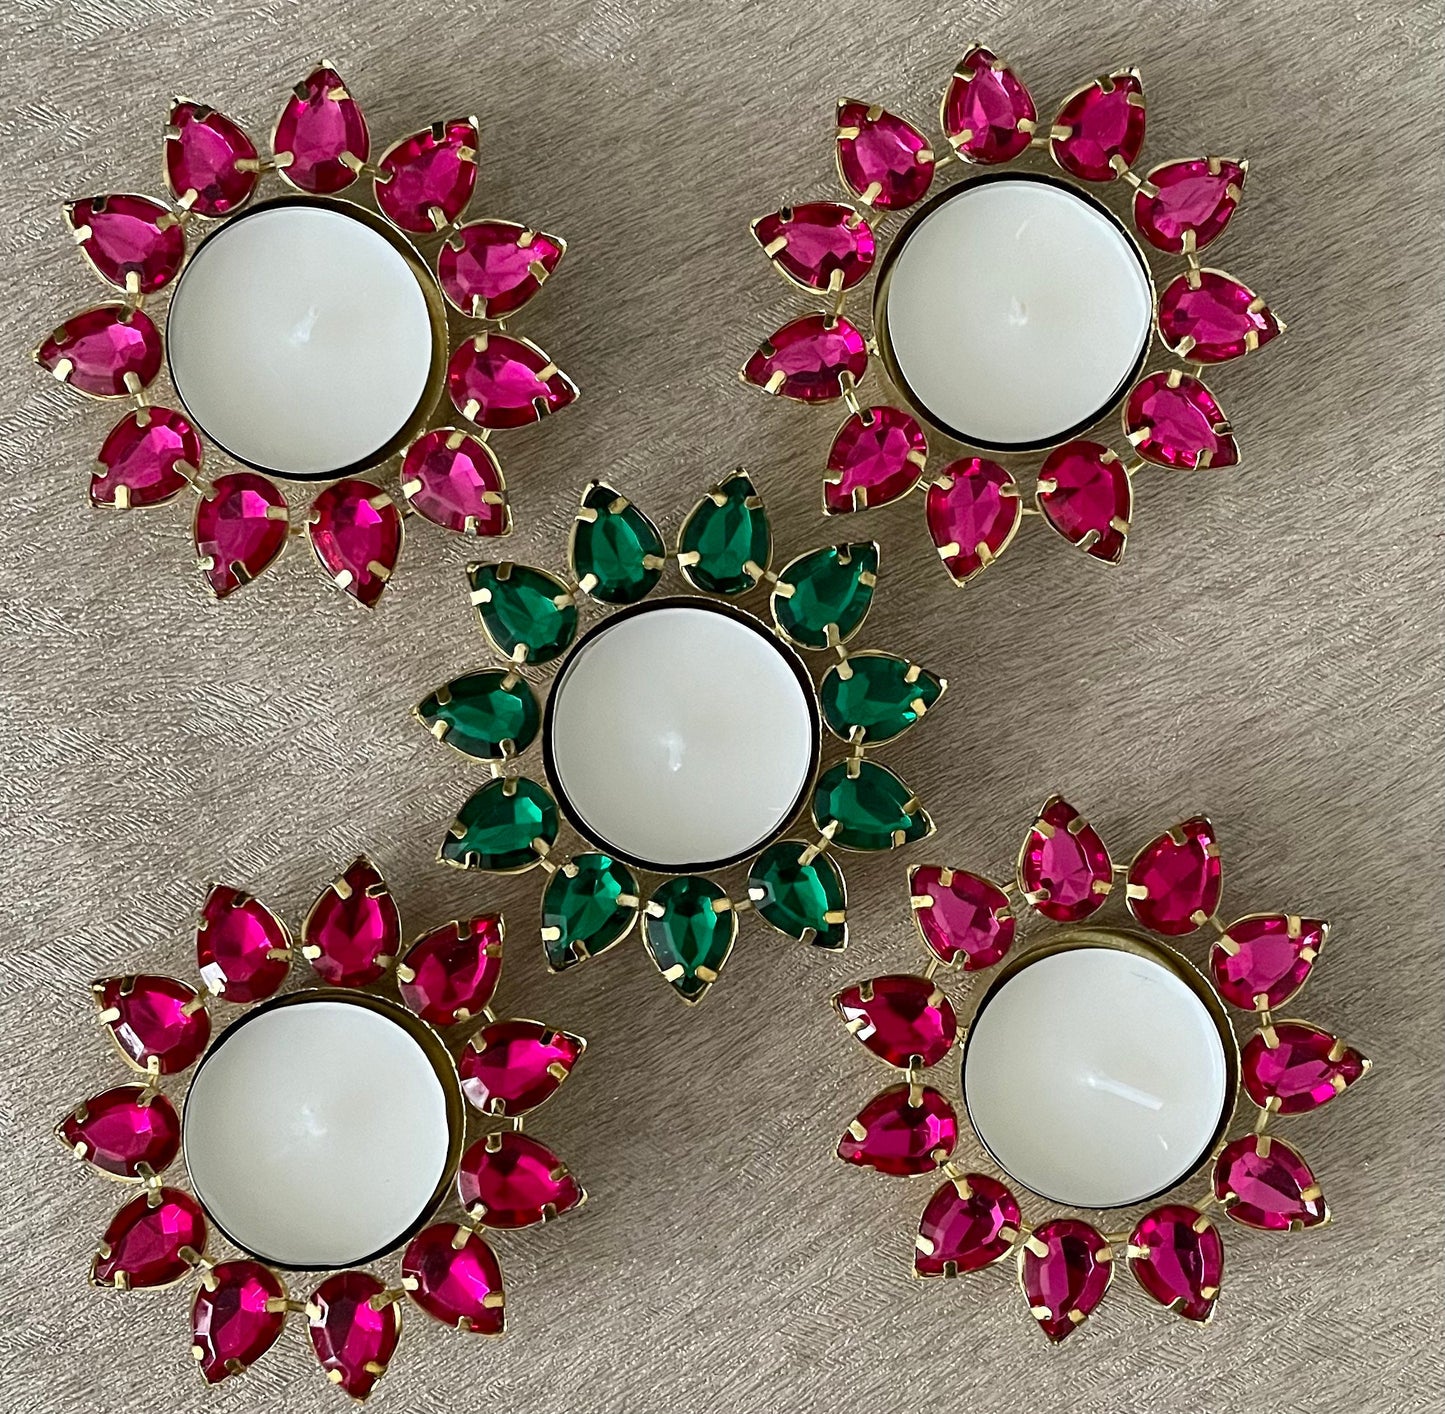 12 x Diwali, Deepawali Tea-light Candles Holder, Metal Crystals Diyas, Diva, Deeya,for Gifting Home Decor, House-Warming, Dholki